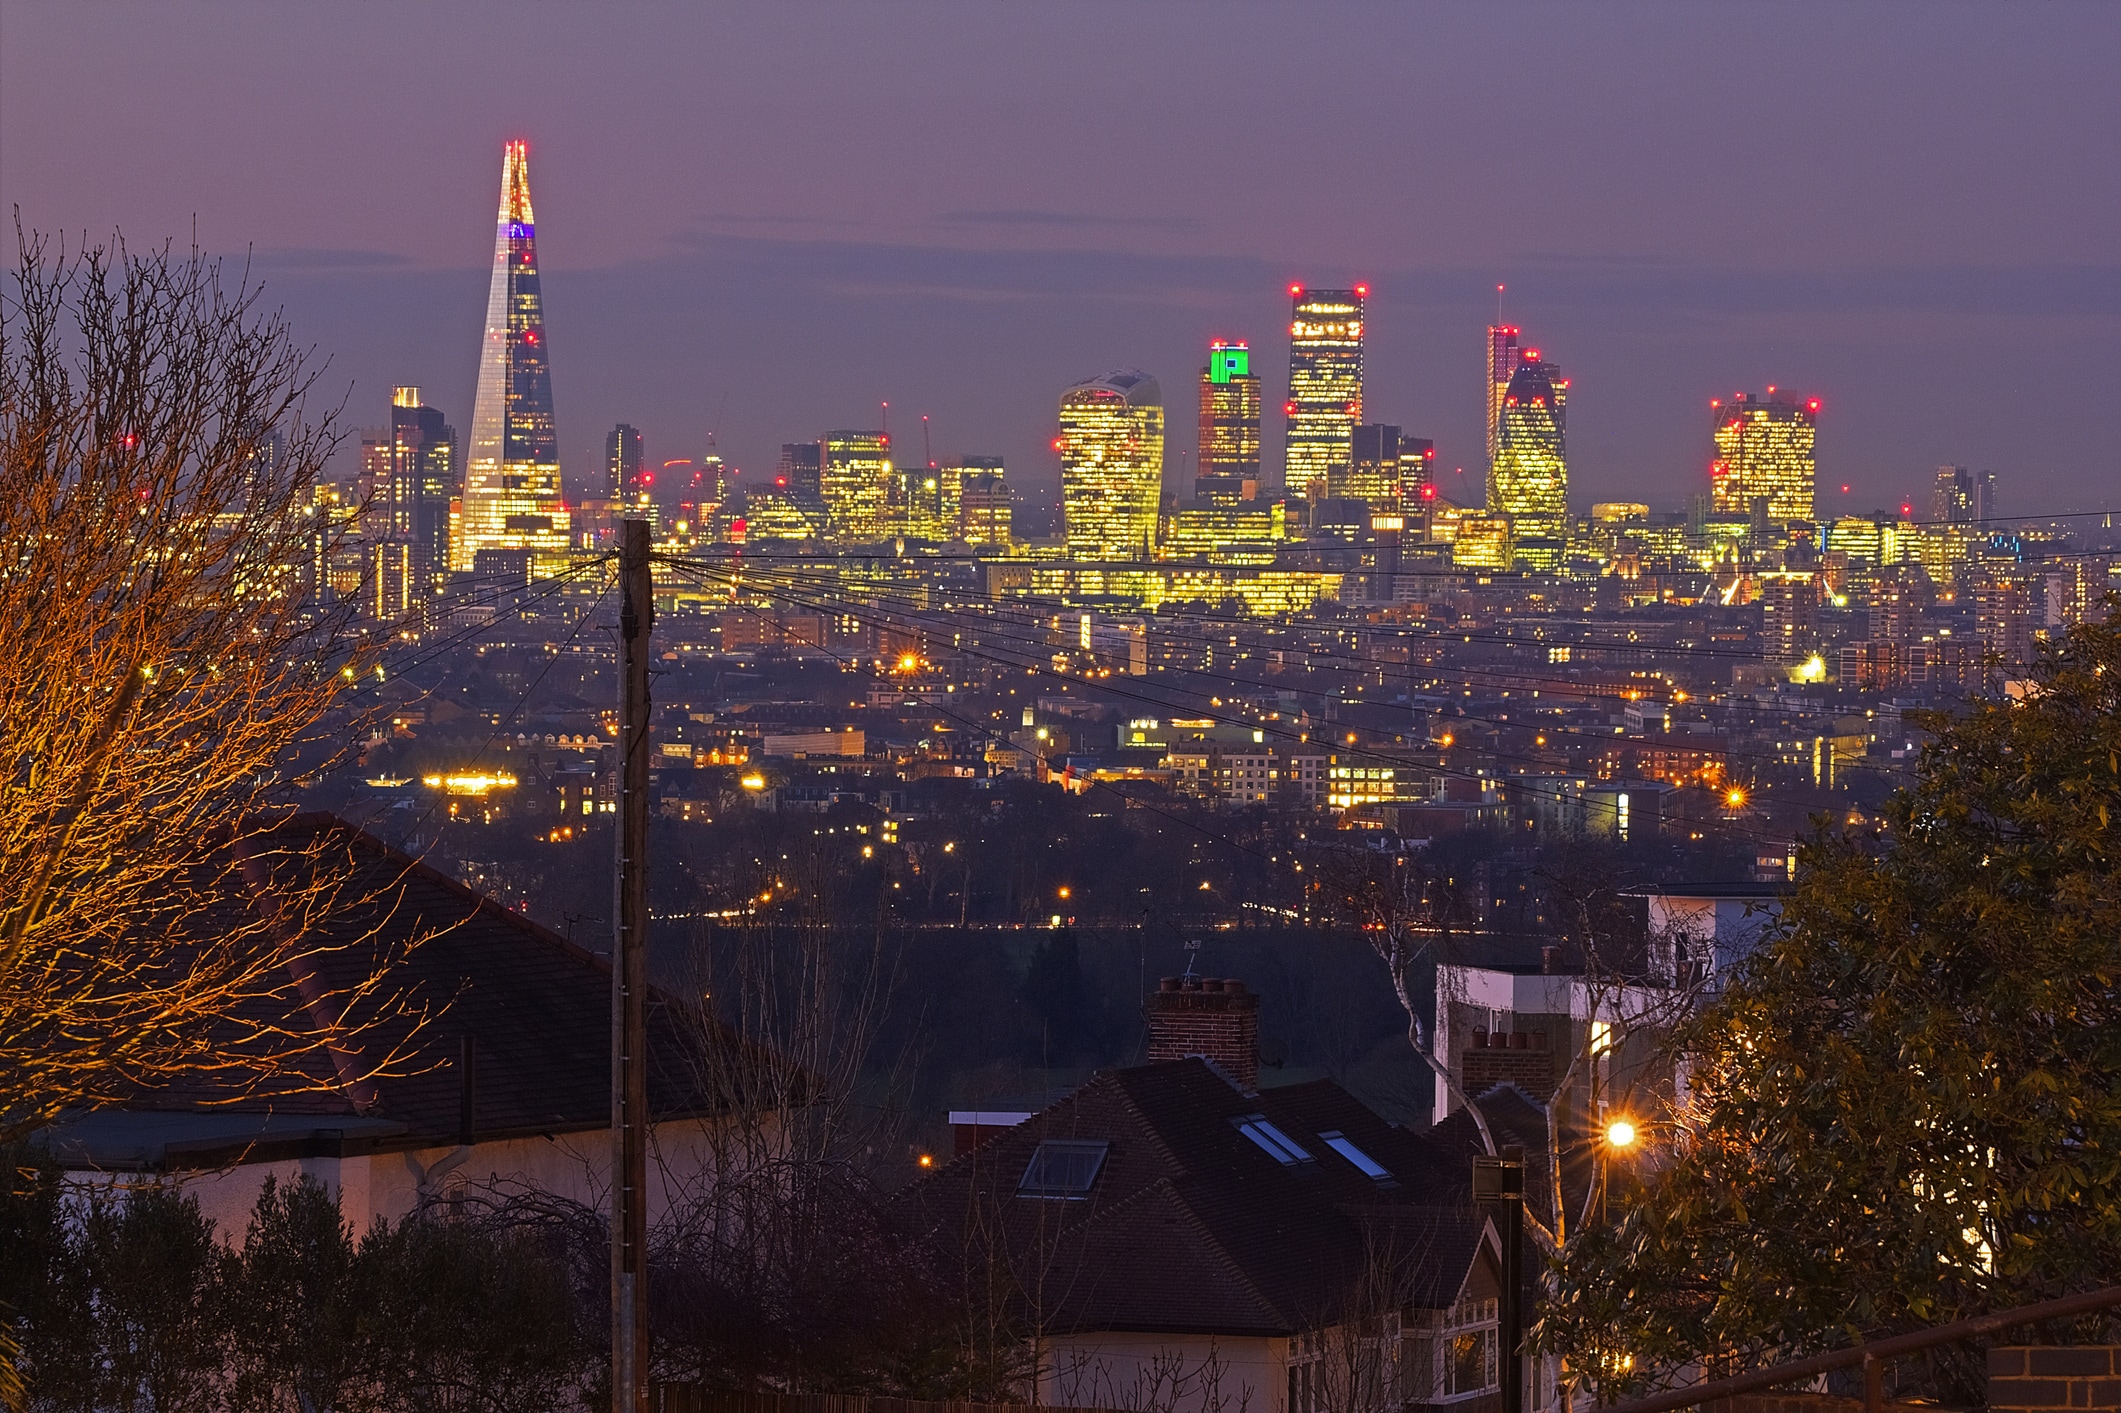 London skyline in the evening